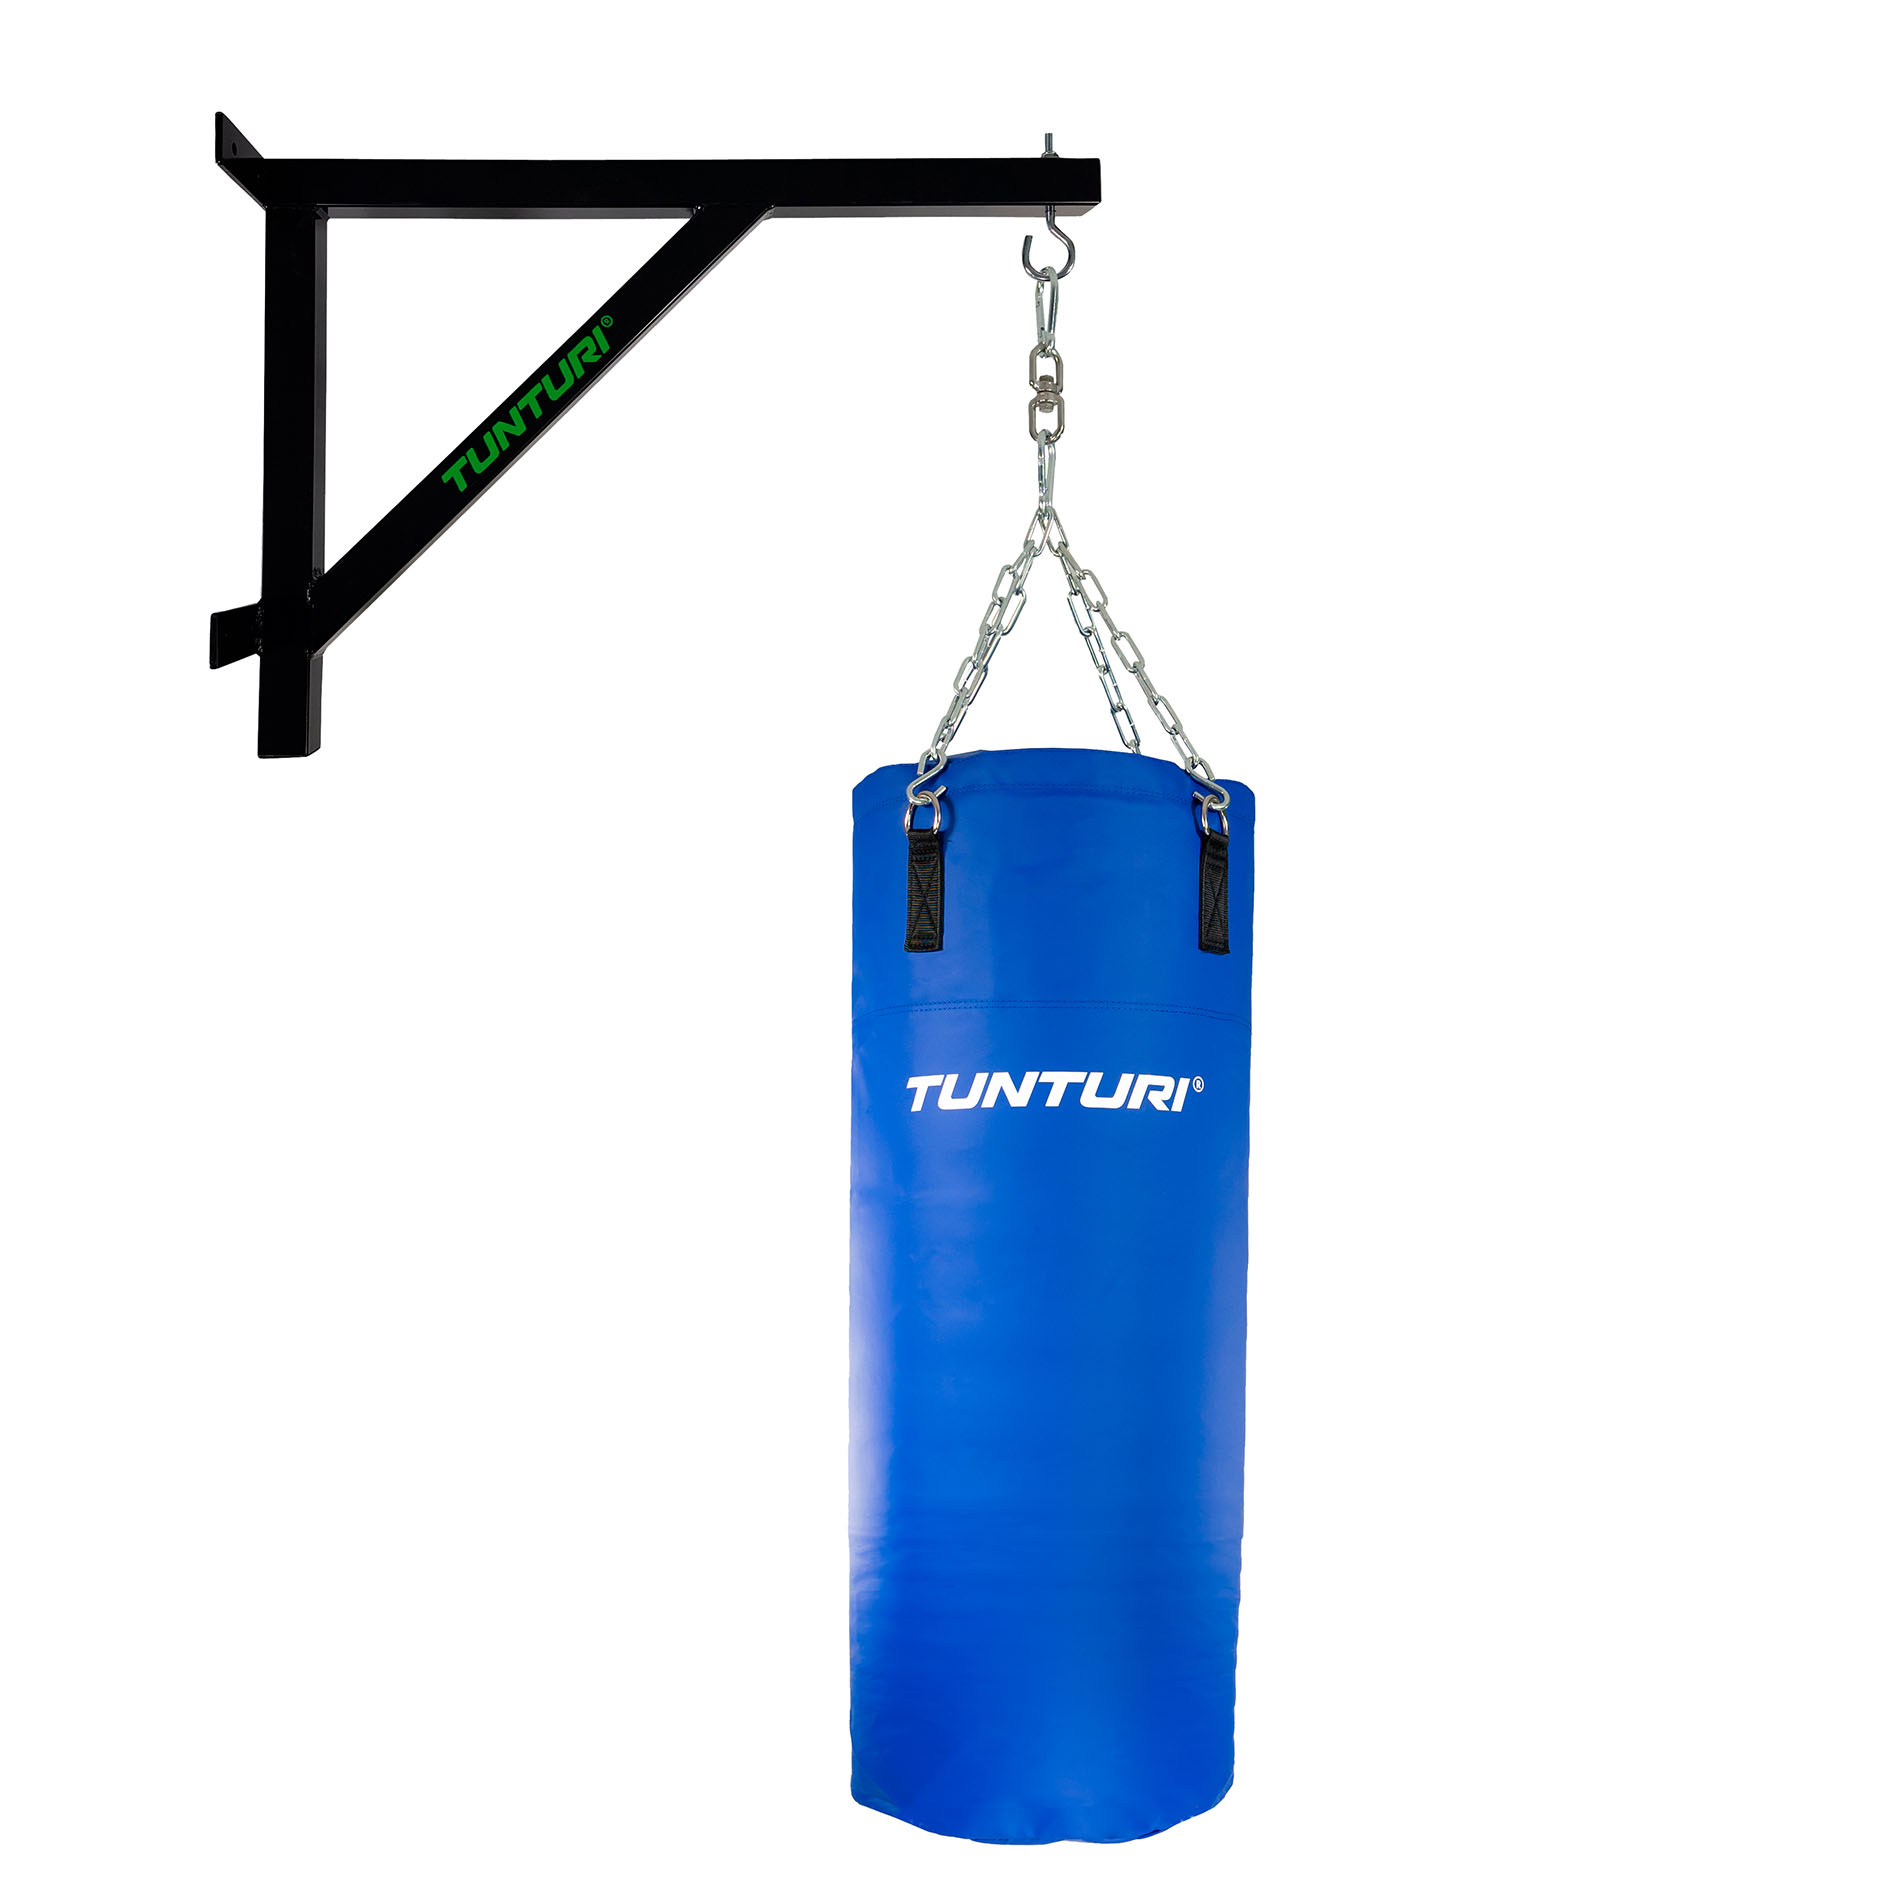 Aqua punching bag - boxing bag